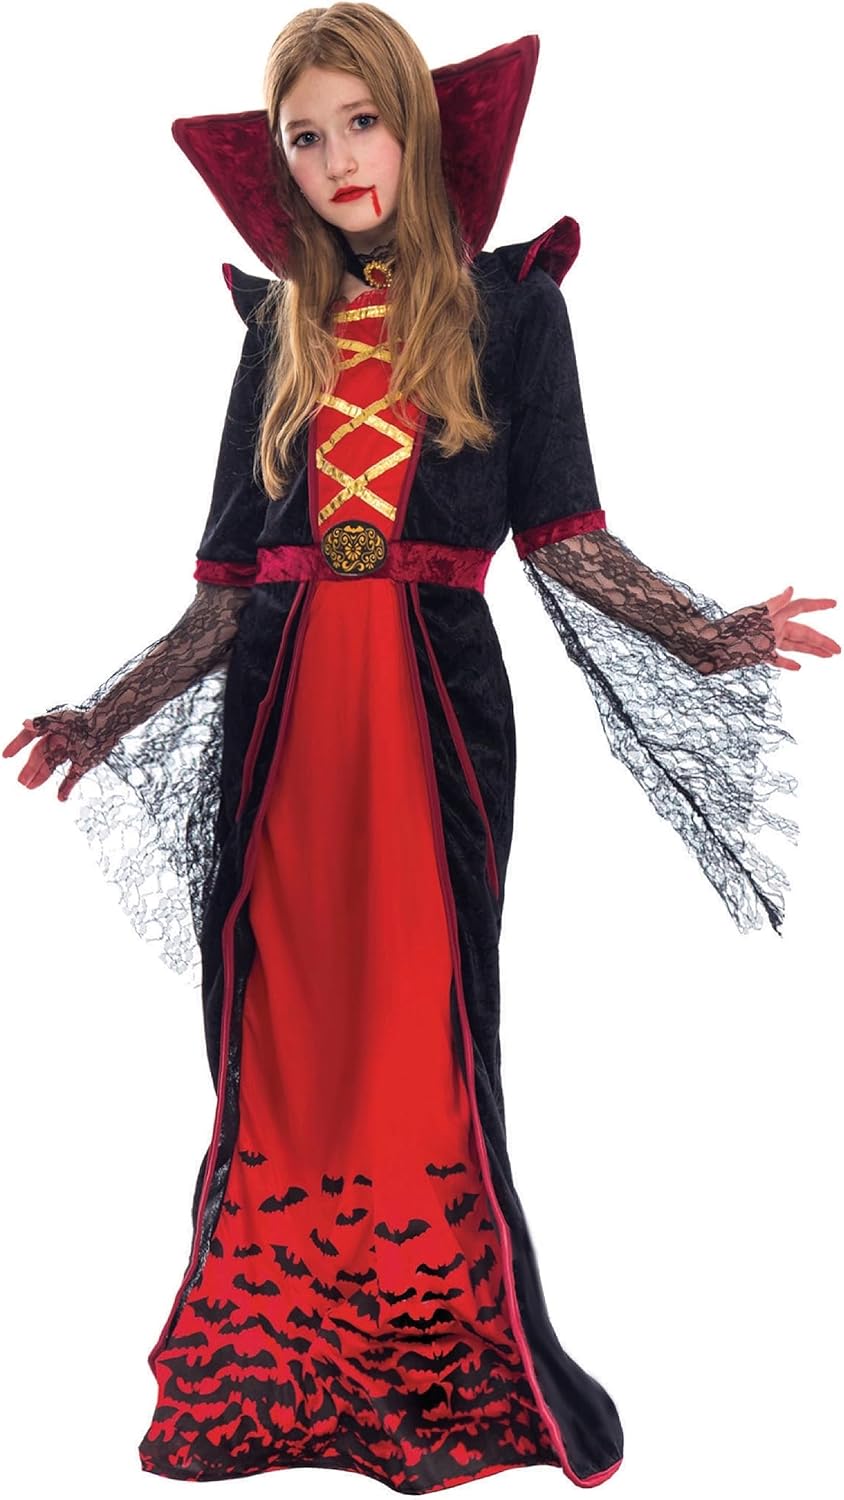 Royal Vampire Costume for Girls Deluxe Set Halloween Gothic Victorian Vampiress Queen Dress Up Party